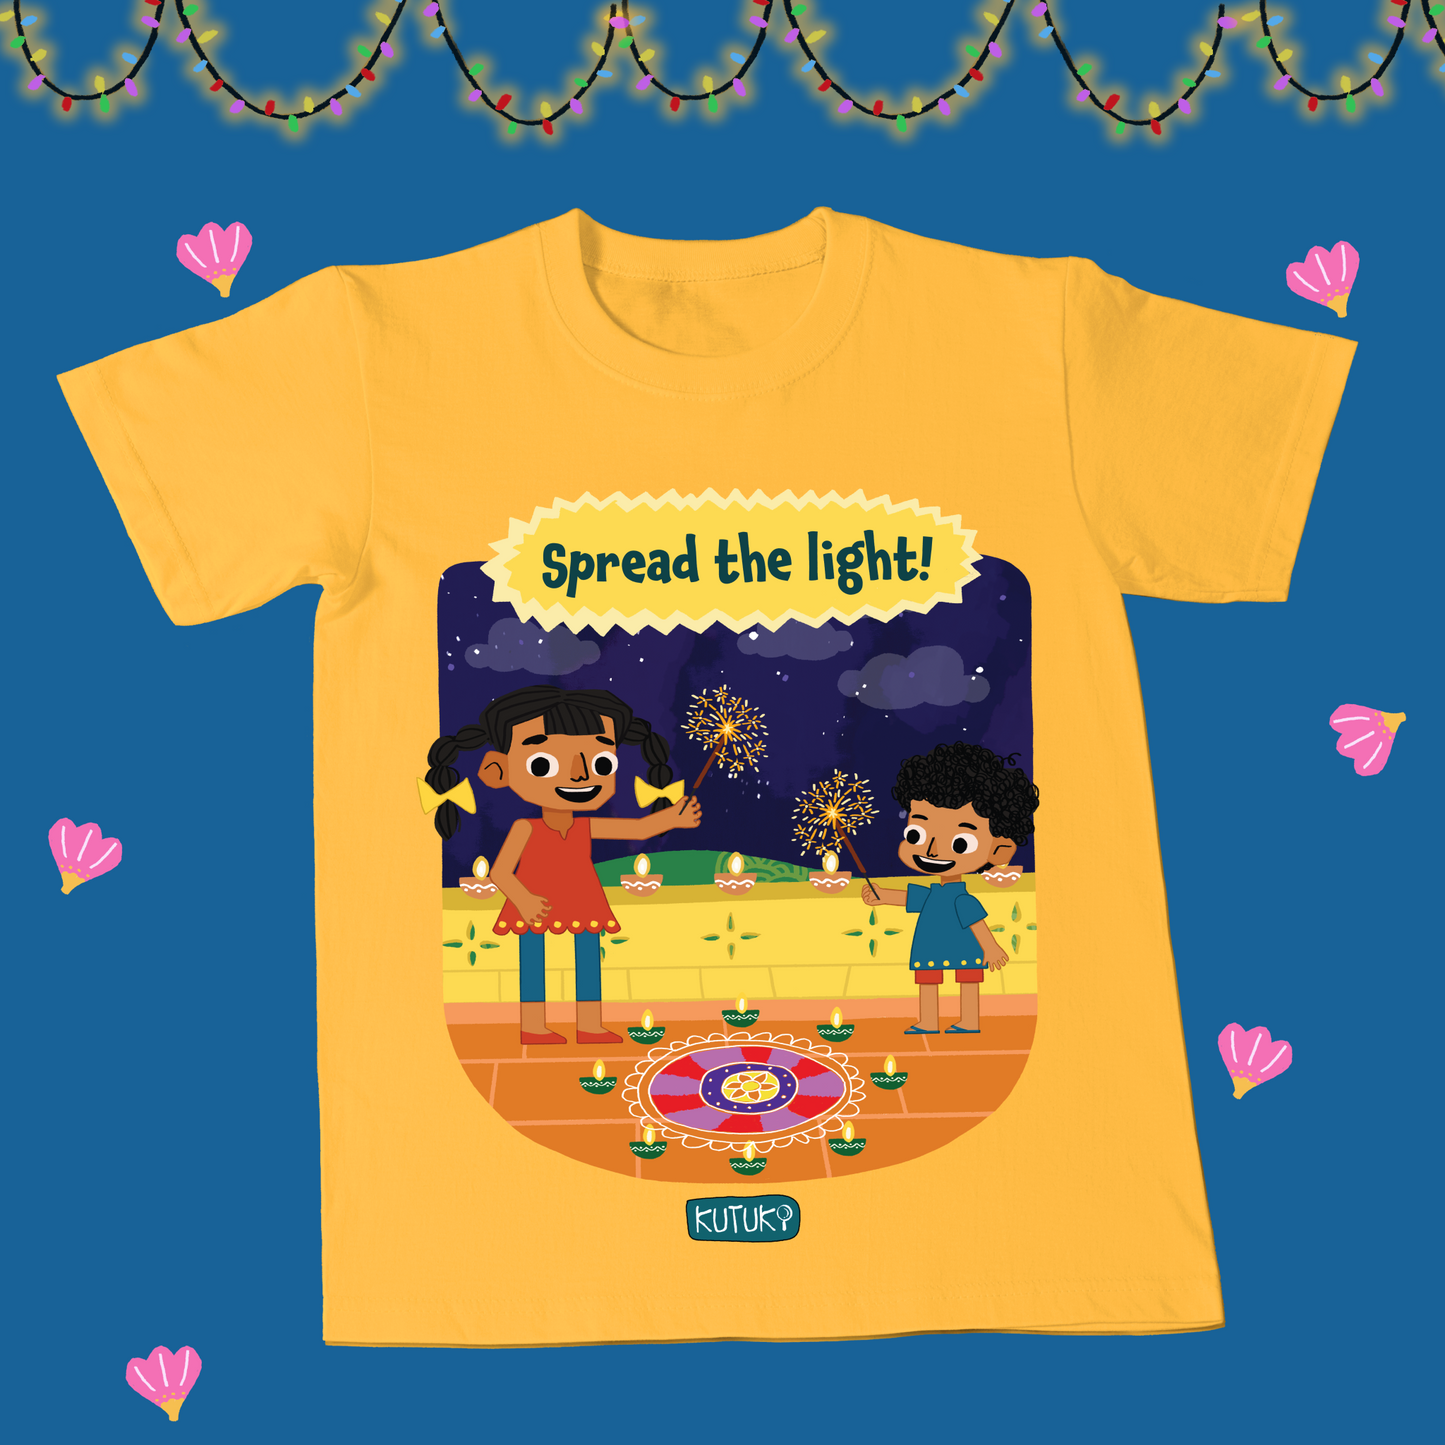 Spread the light- Kids Festive T-shirt